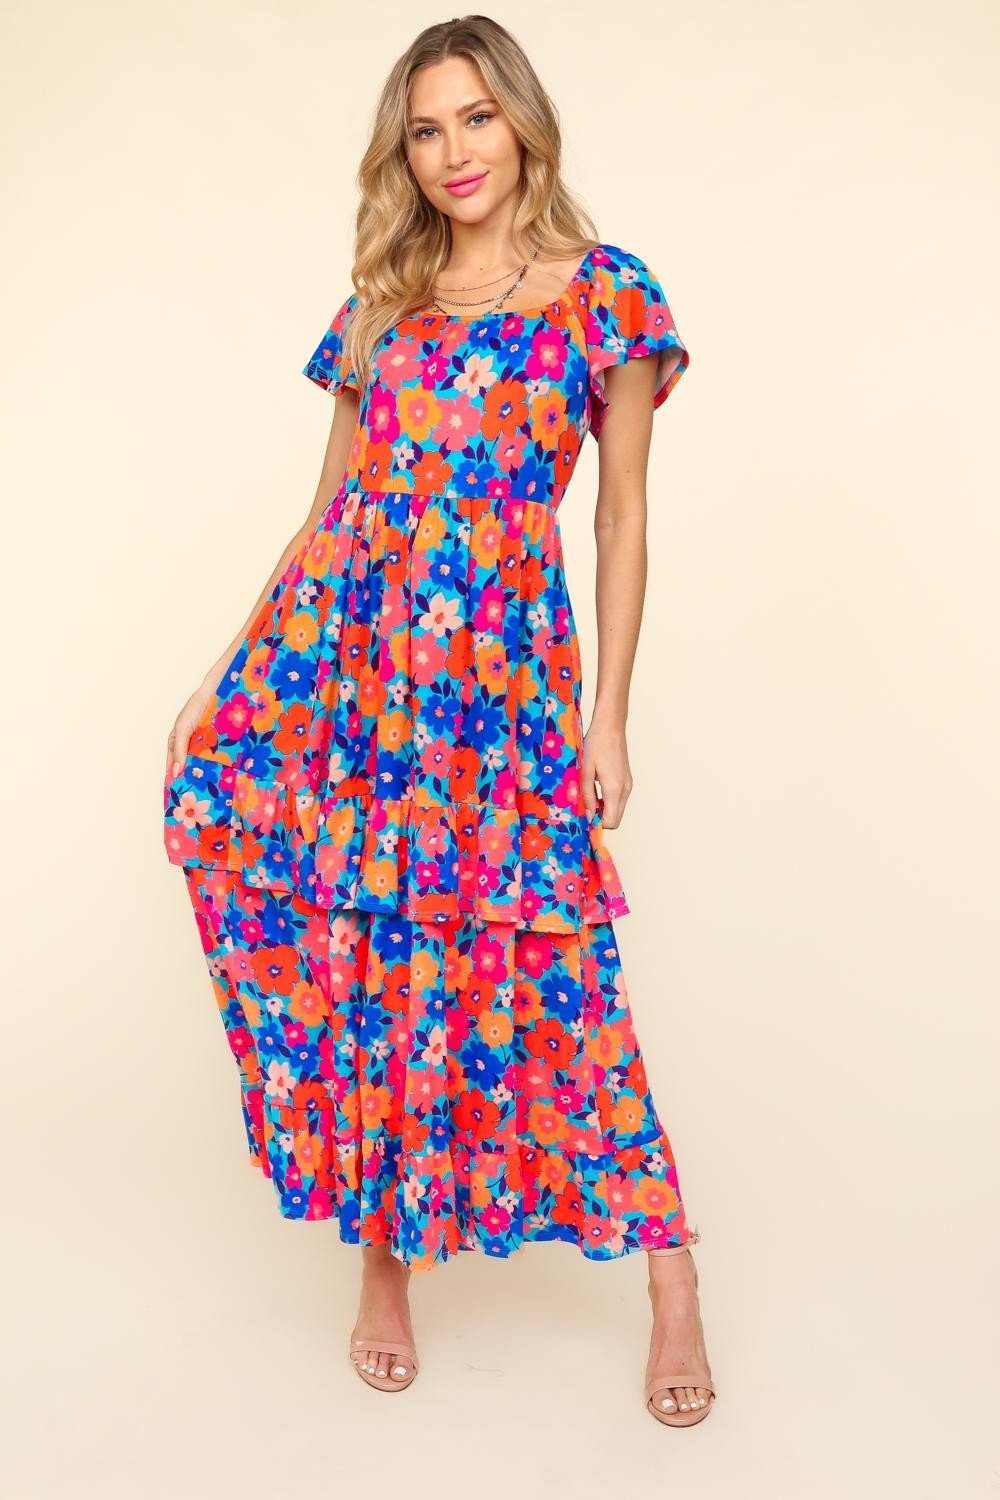 Floral Ruffled Maxi Dress with Pockets in Blue OrangeMaxi DressHaptics